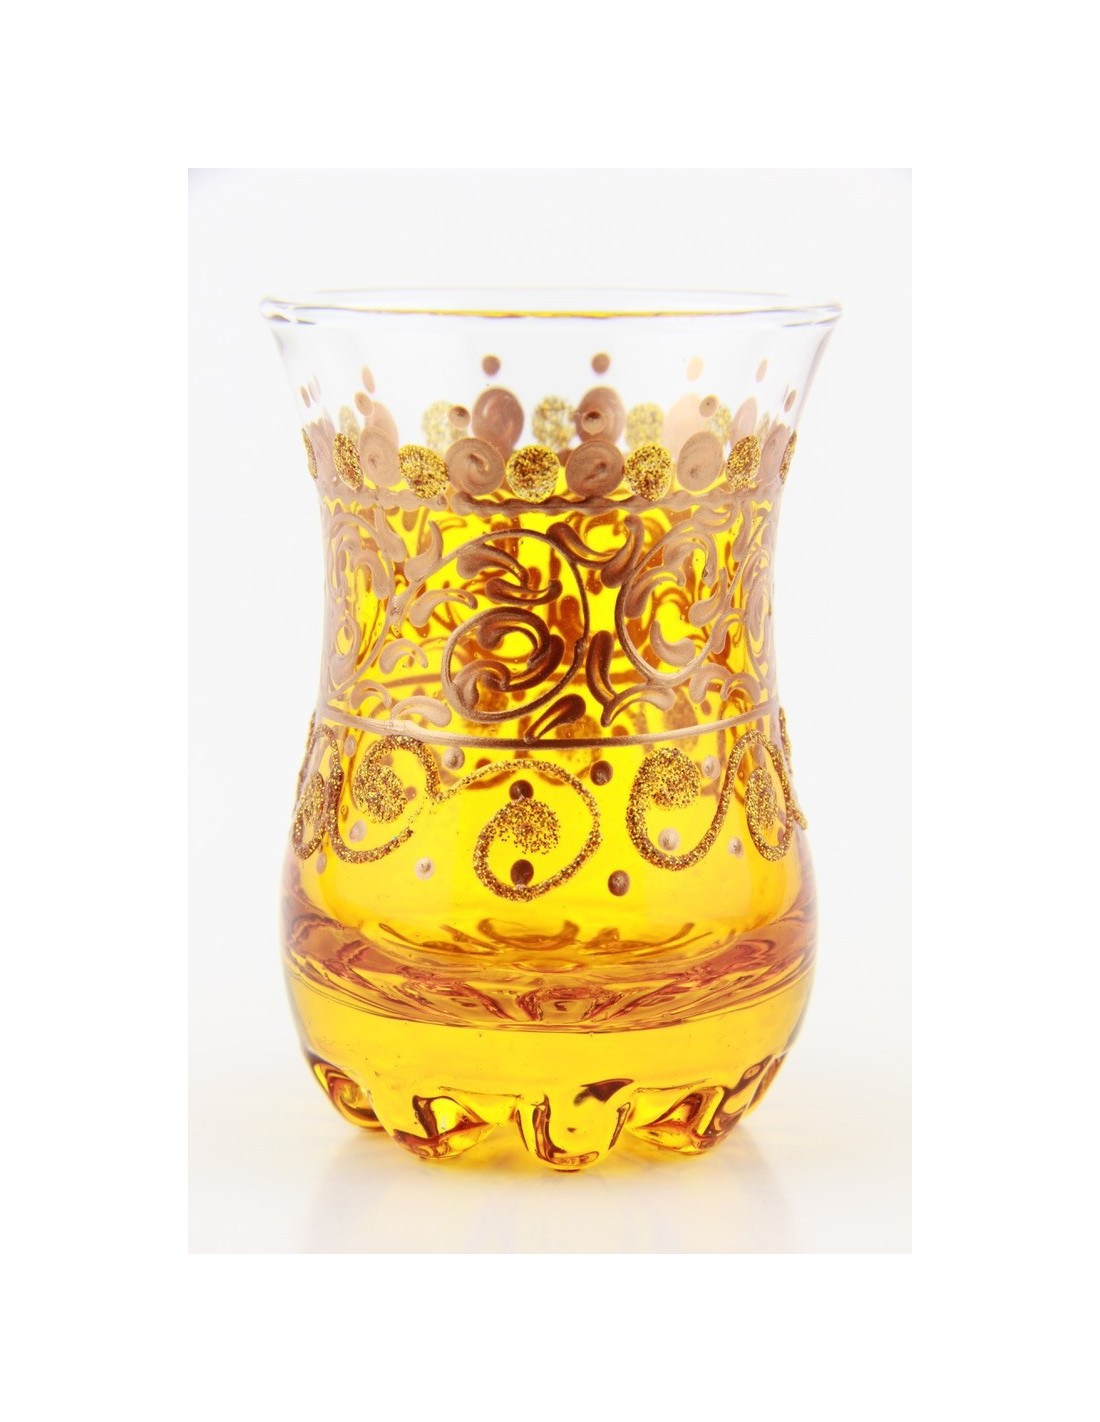 Jewel-Hued Tunisian Tea Ceremony Glass Set - Magic Hour